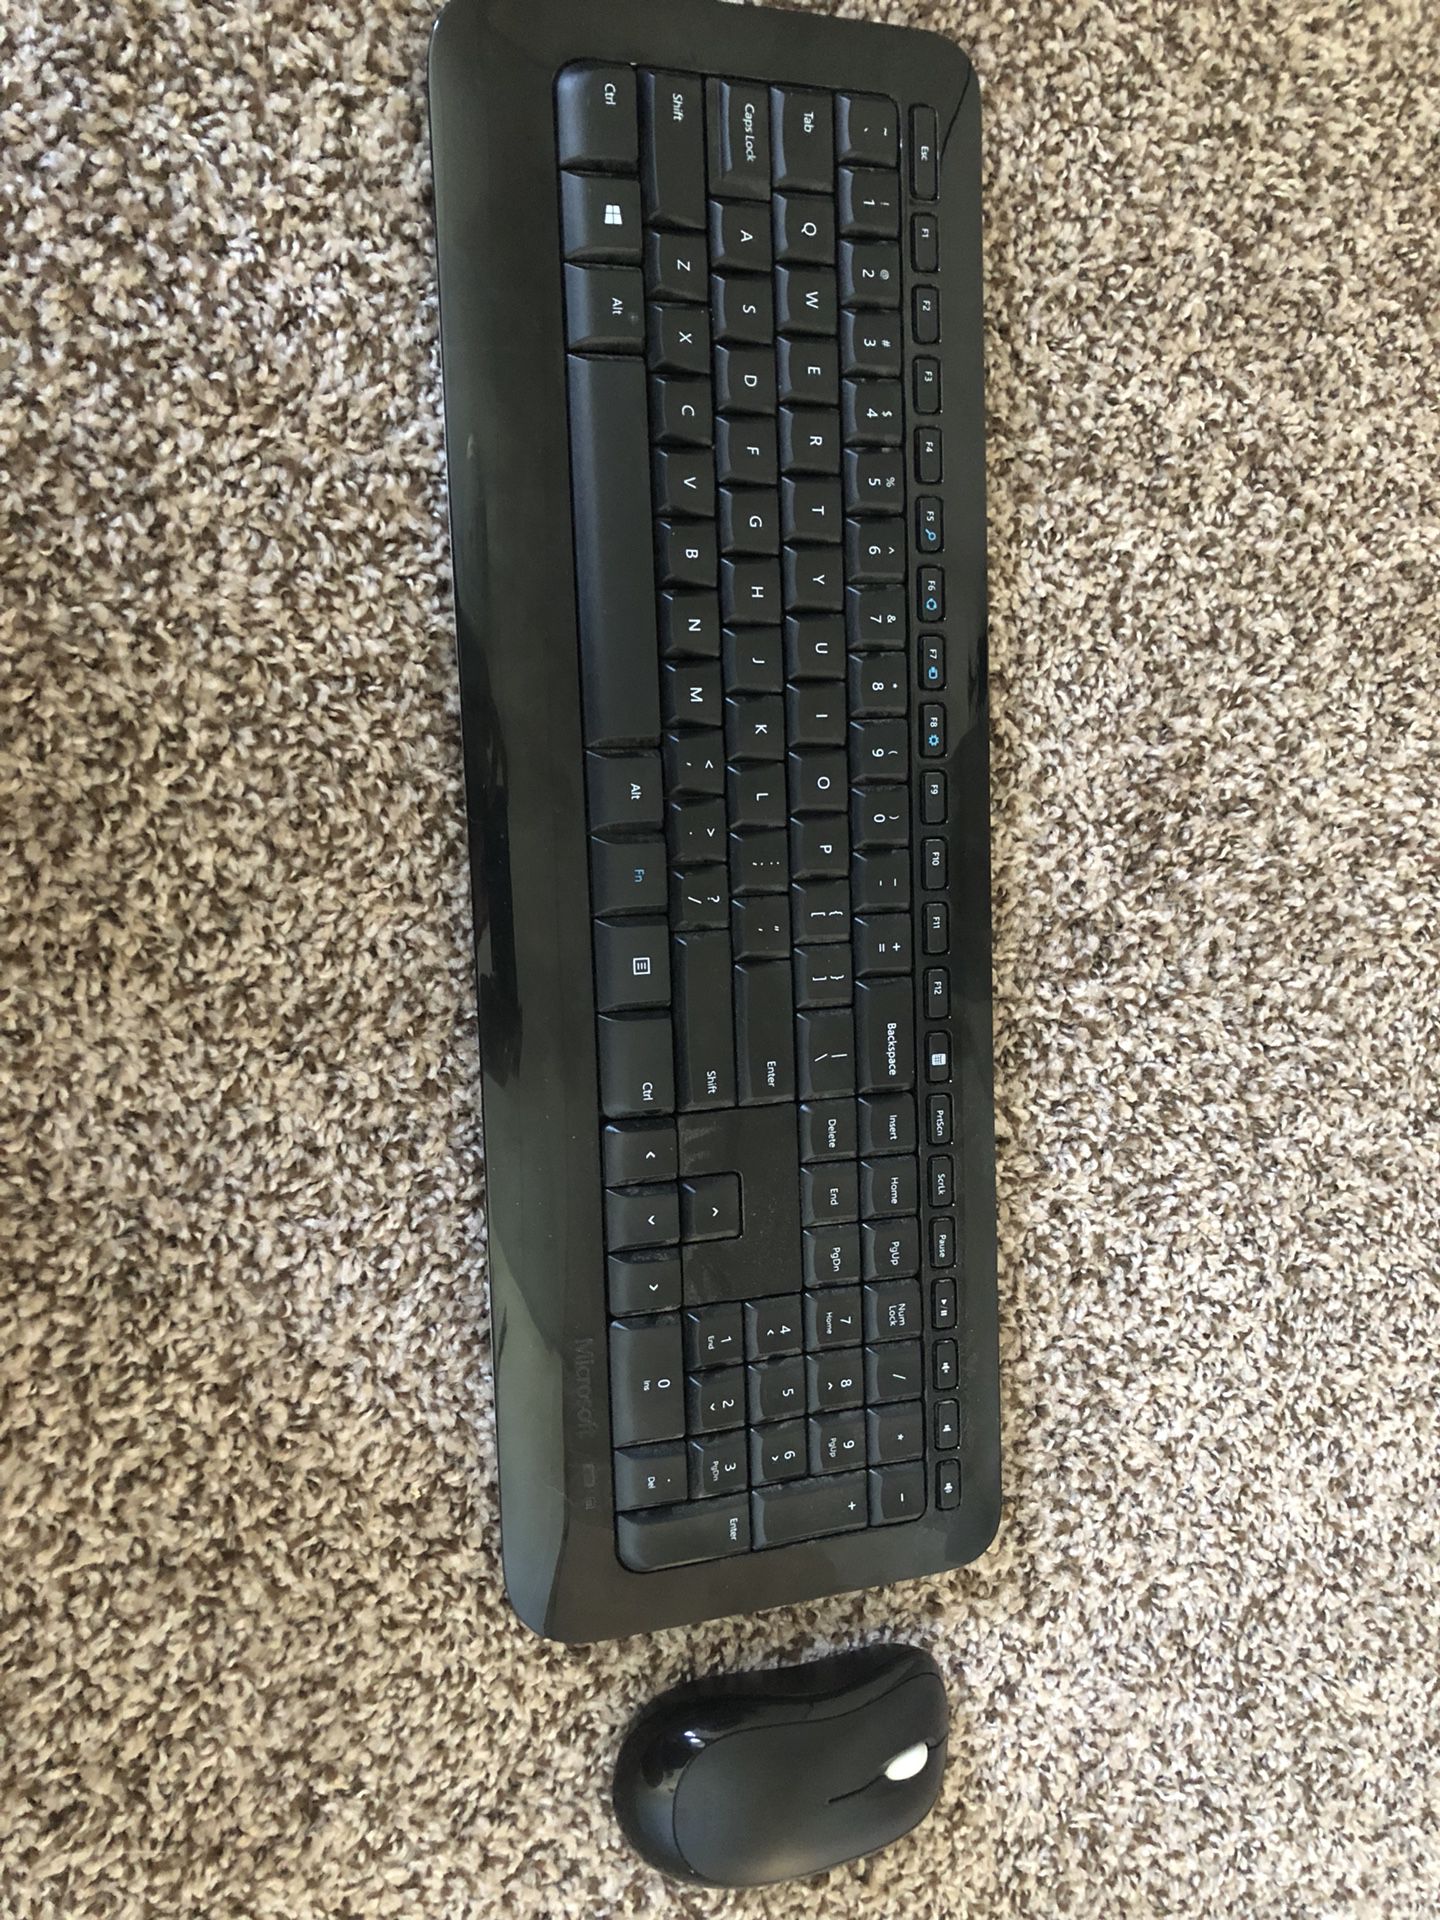 Wireless Microsoft Keyboard and Mouse